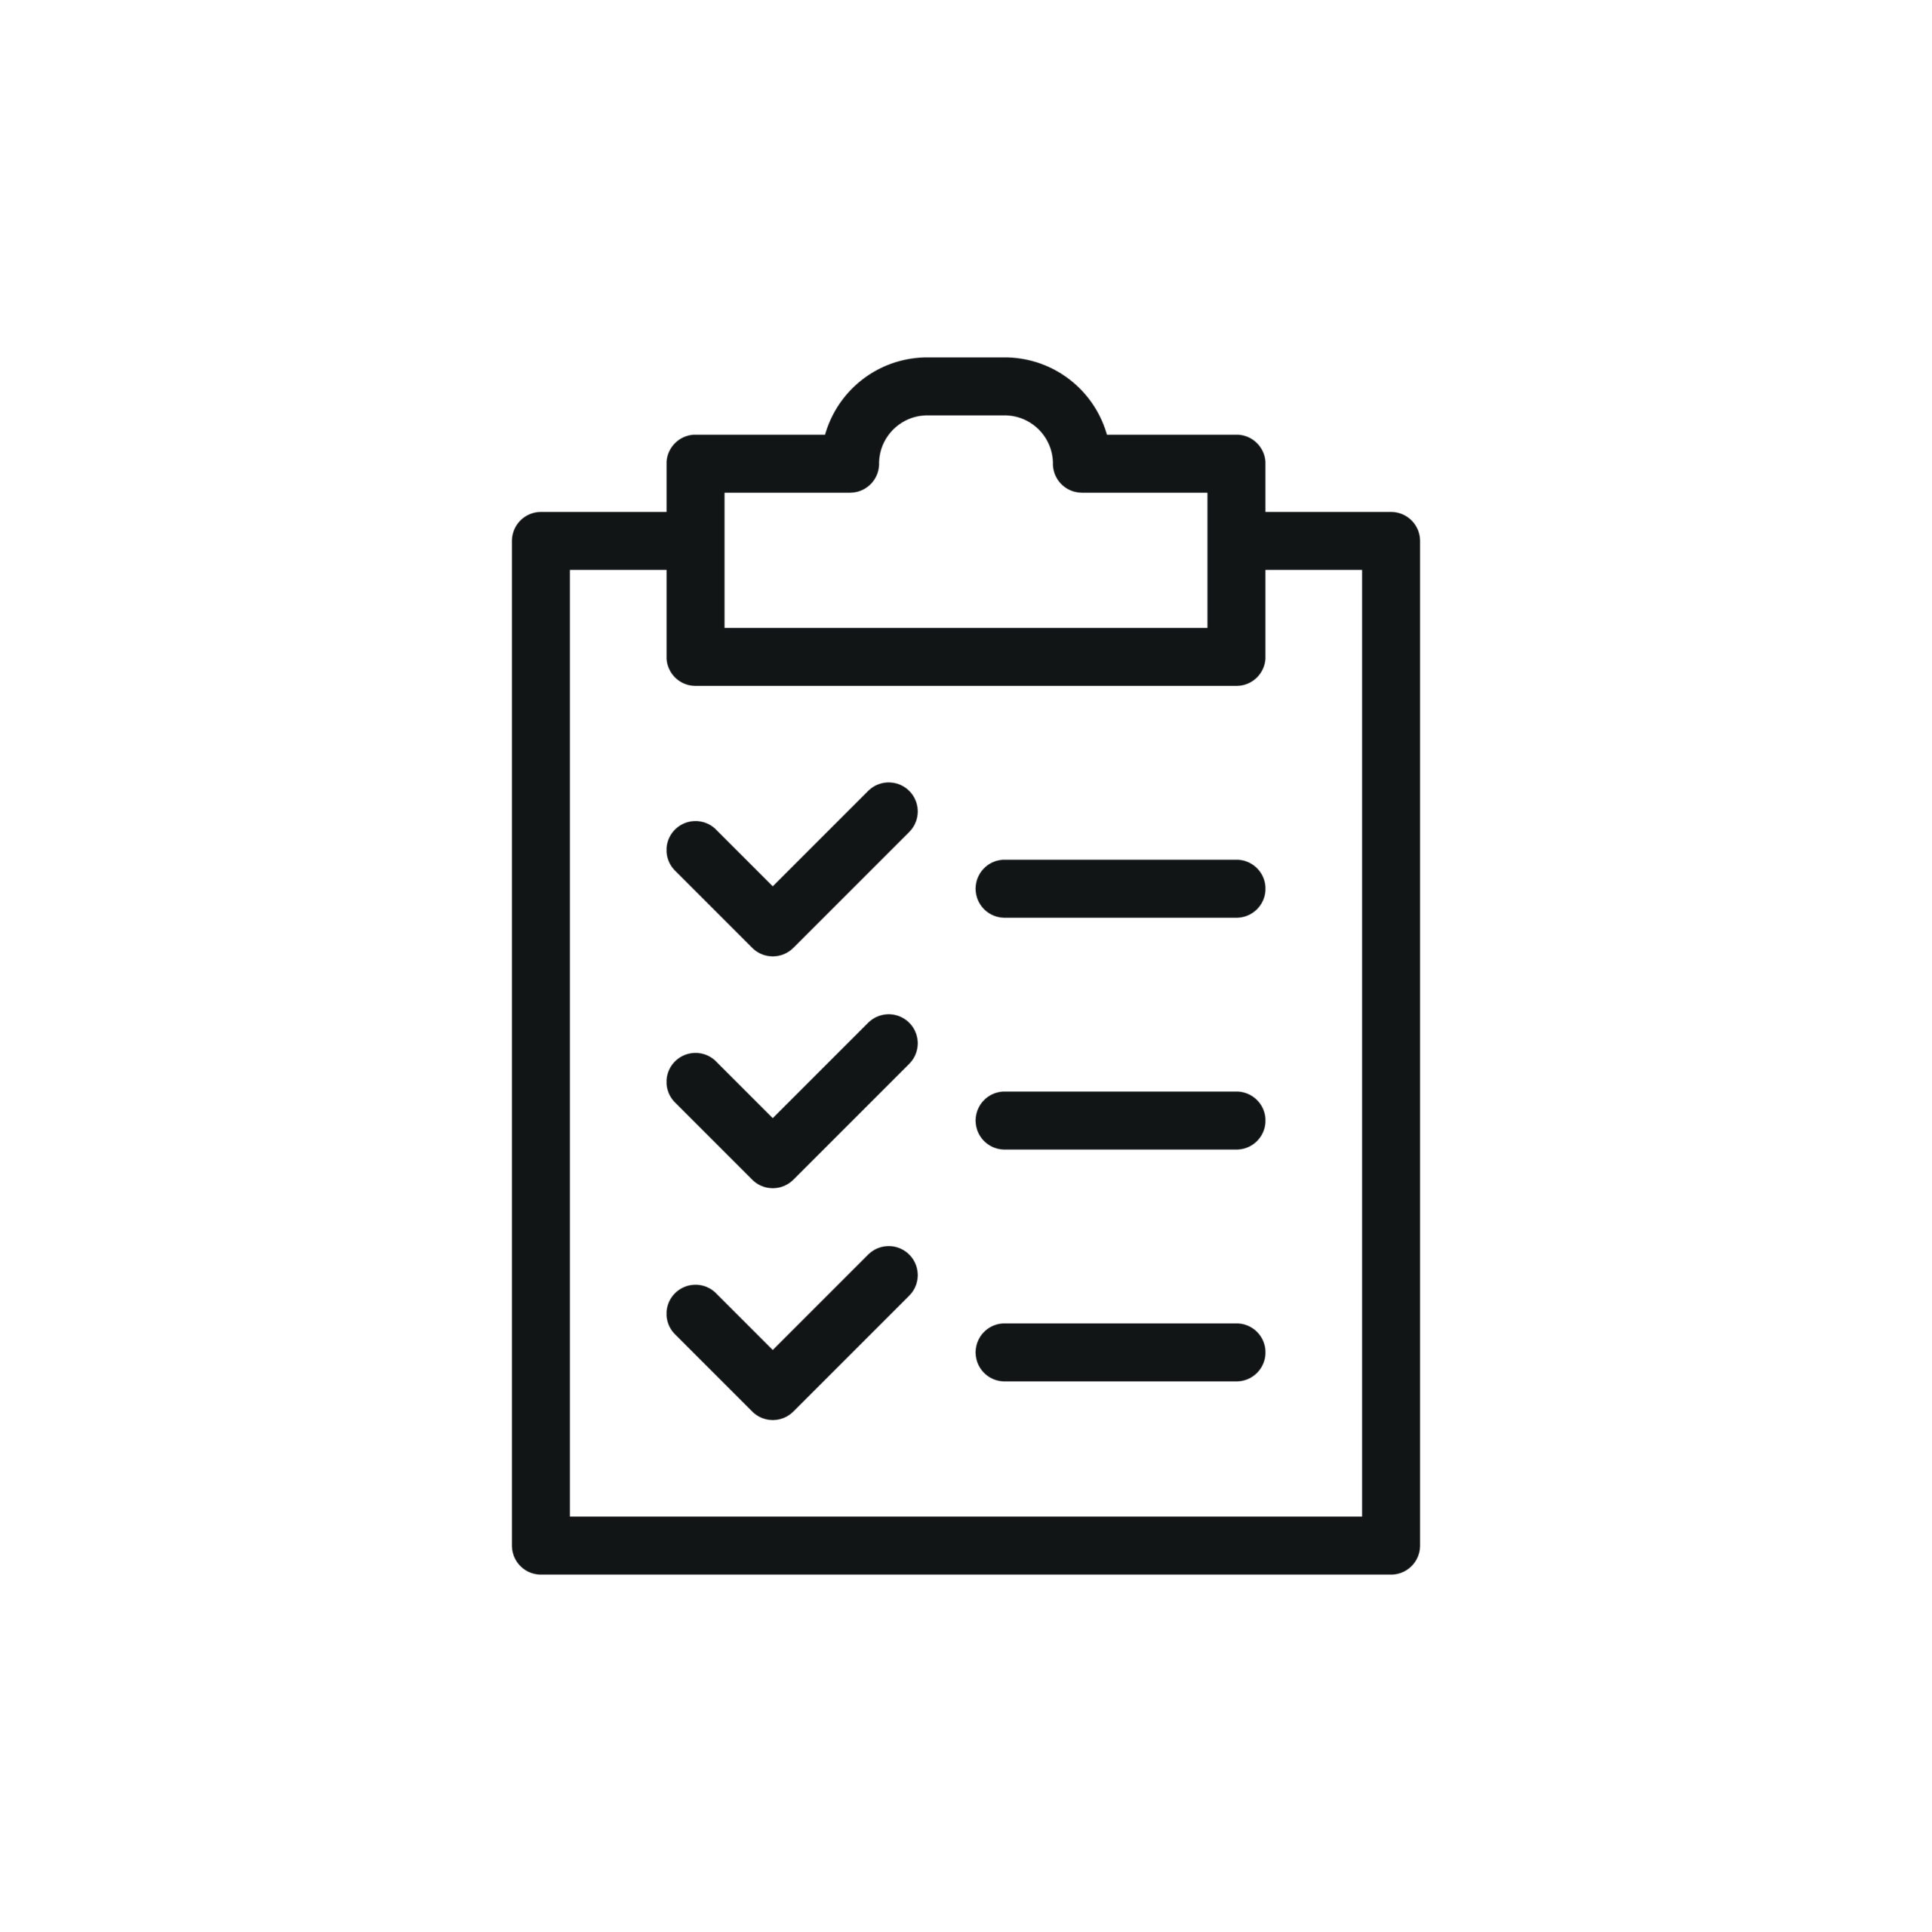 Checklist isolated icon, cargo check vector symbol with editable